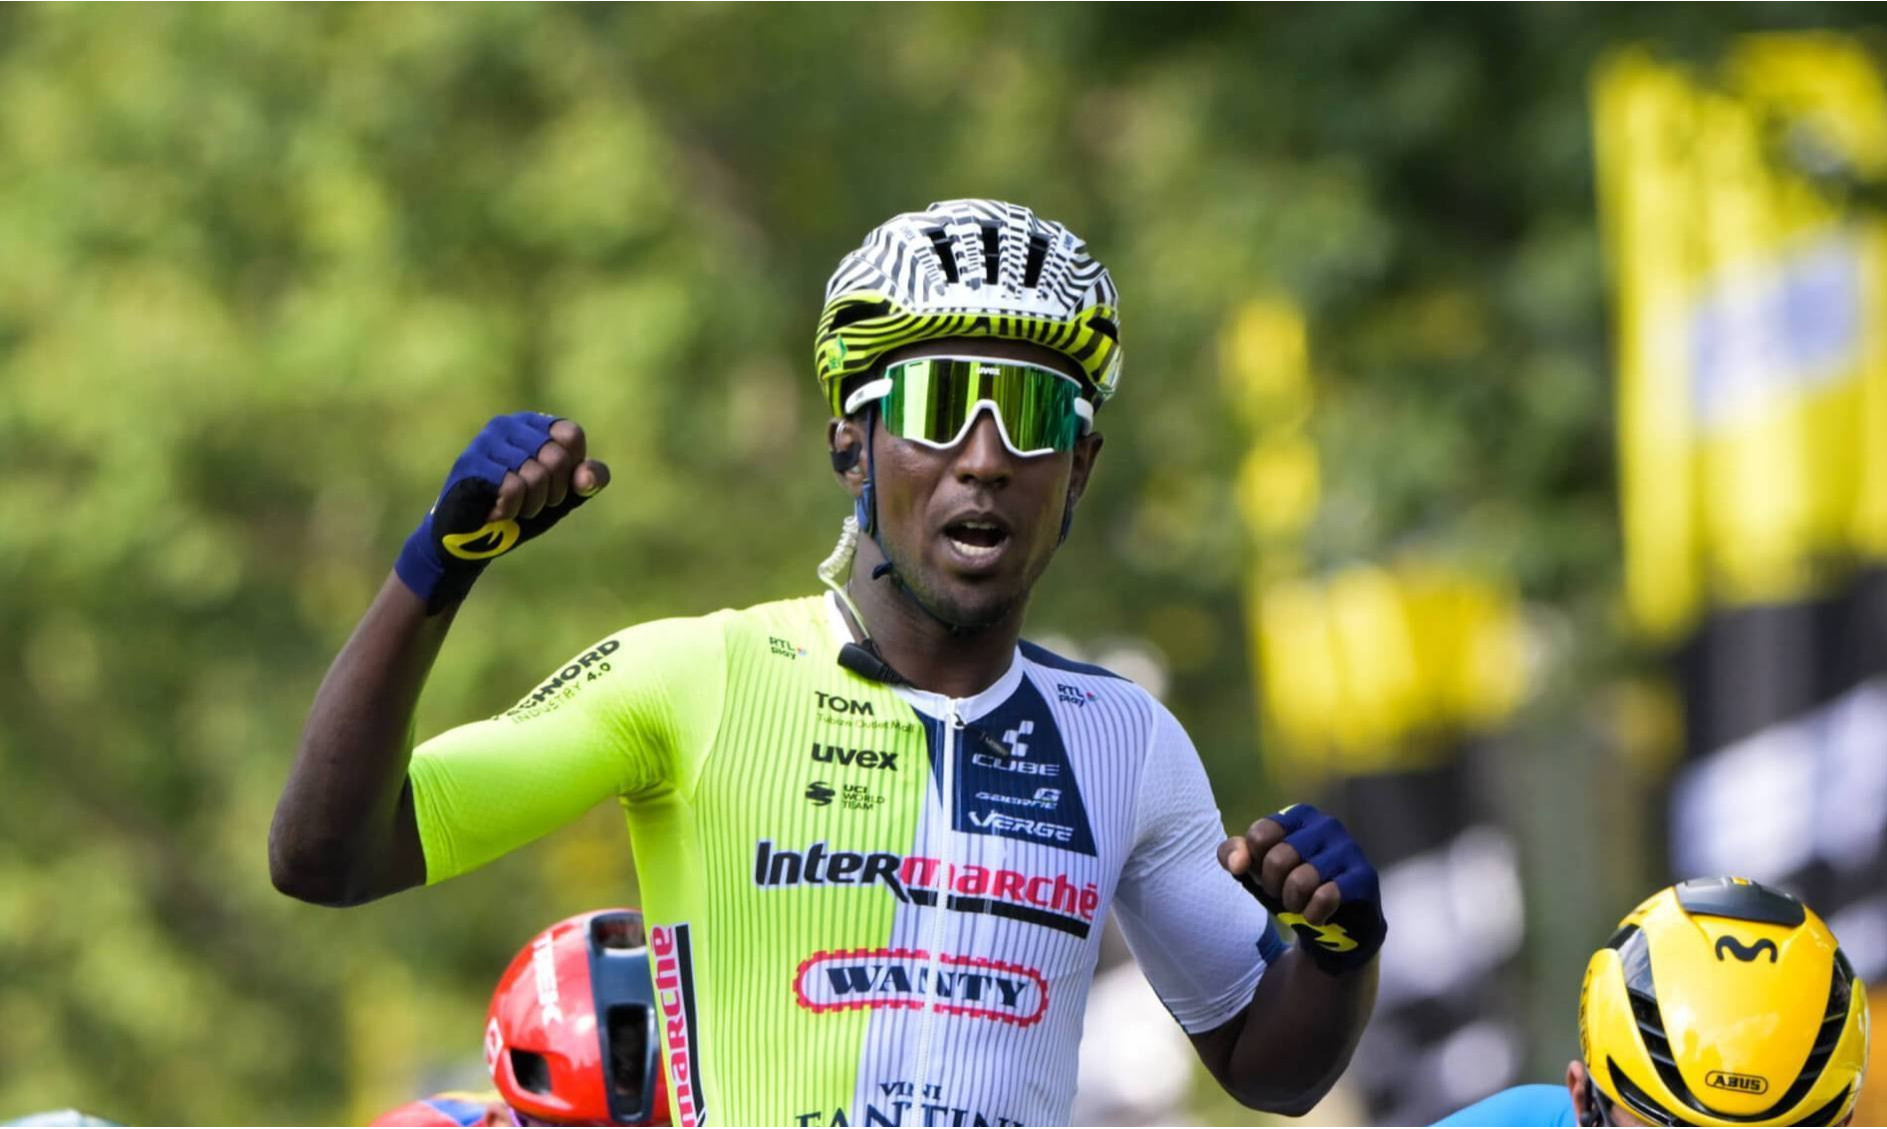 This Time for Africa: эритреец Гирмай выиграл 3 этап Тур де Франс